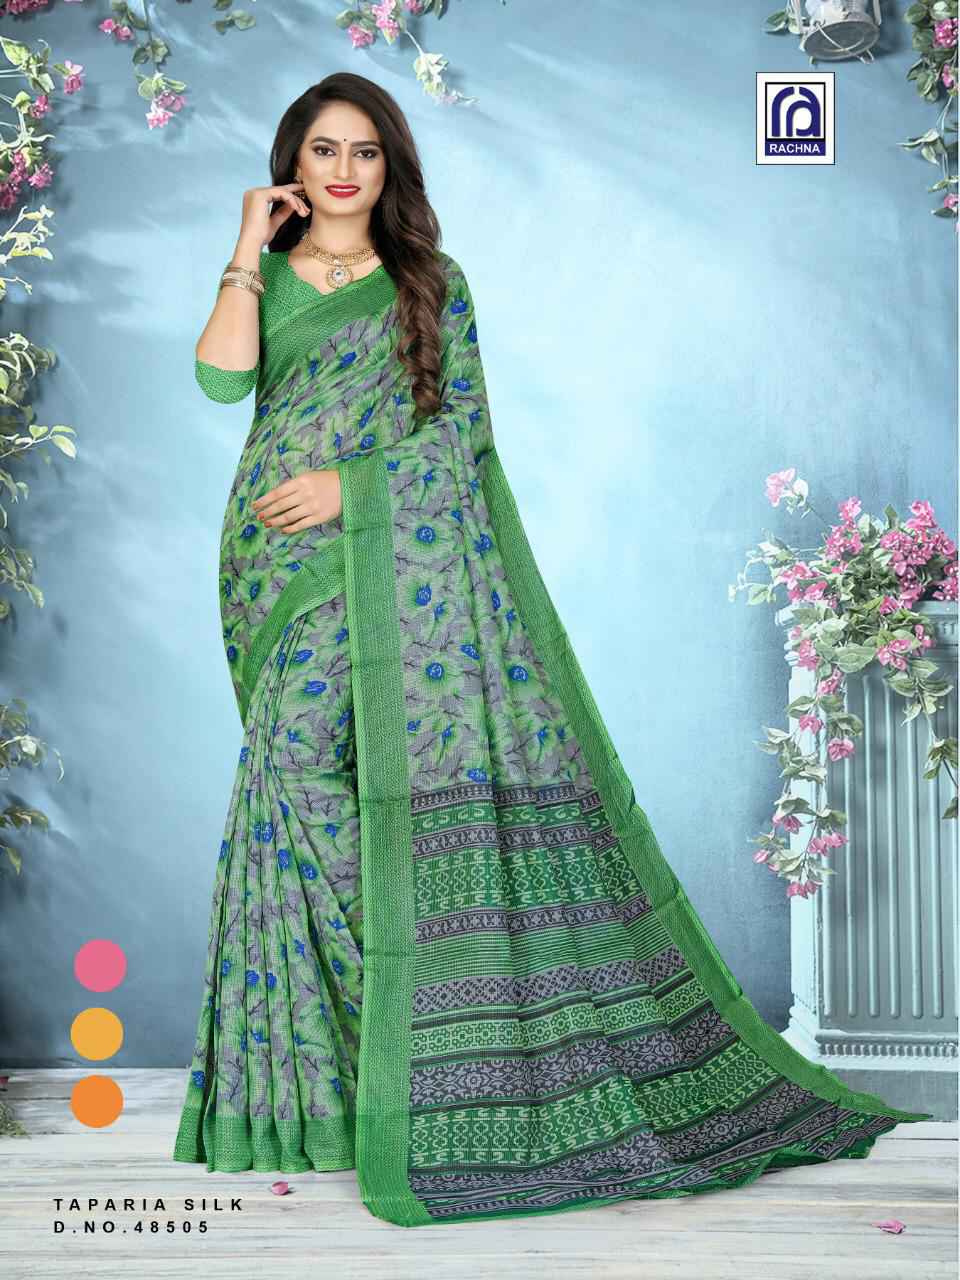 Rachna Taparia Silk Exclusive Cotton Silk Saree New Collection With Price